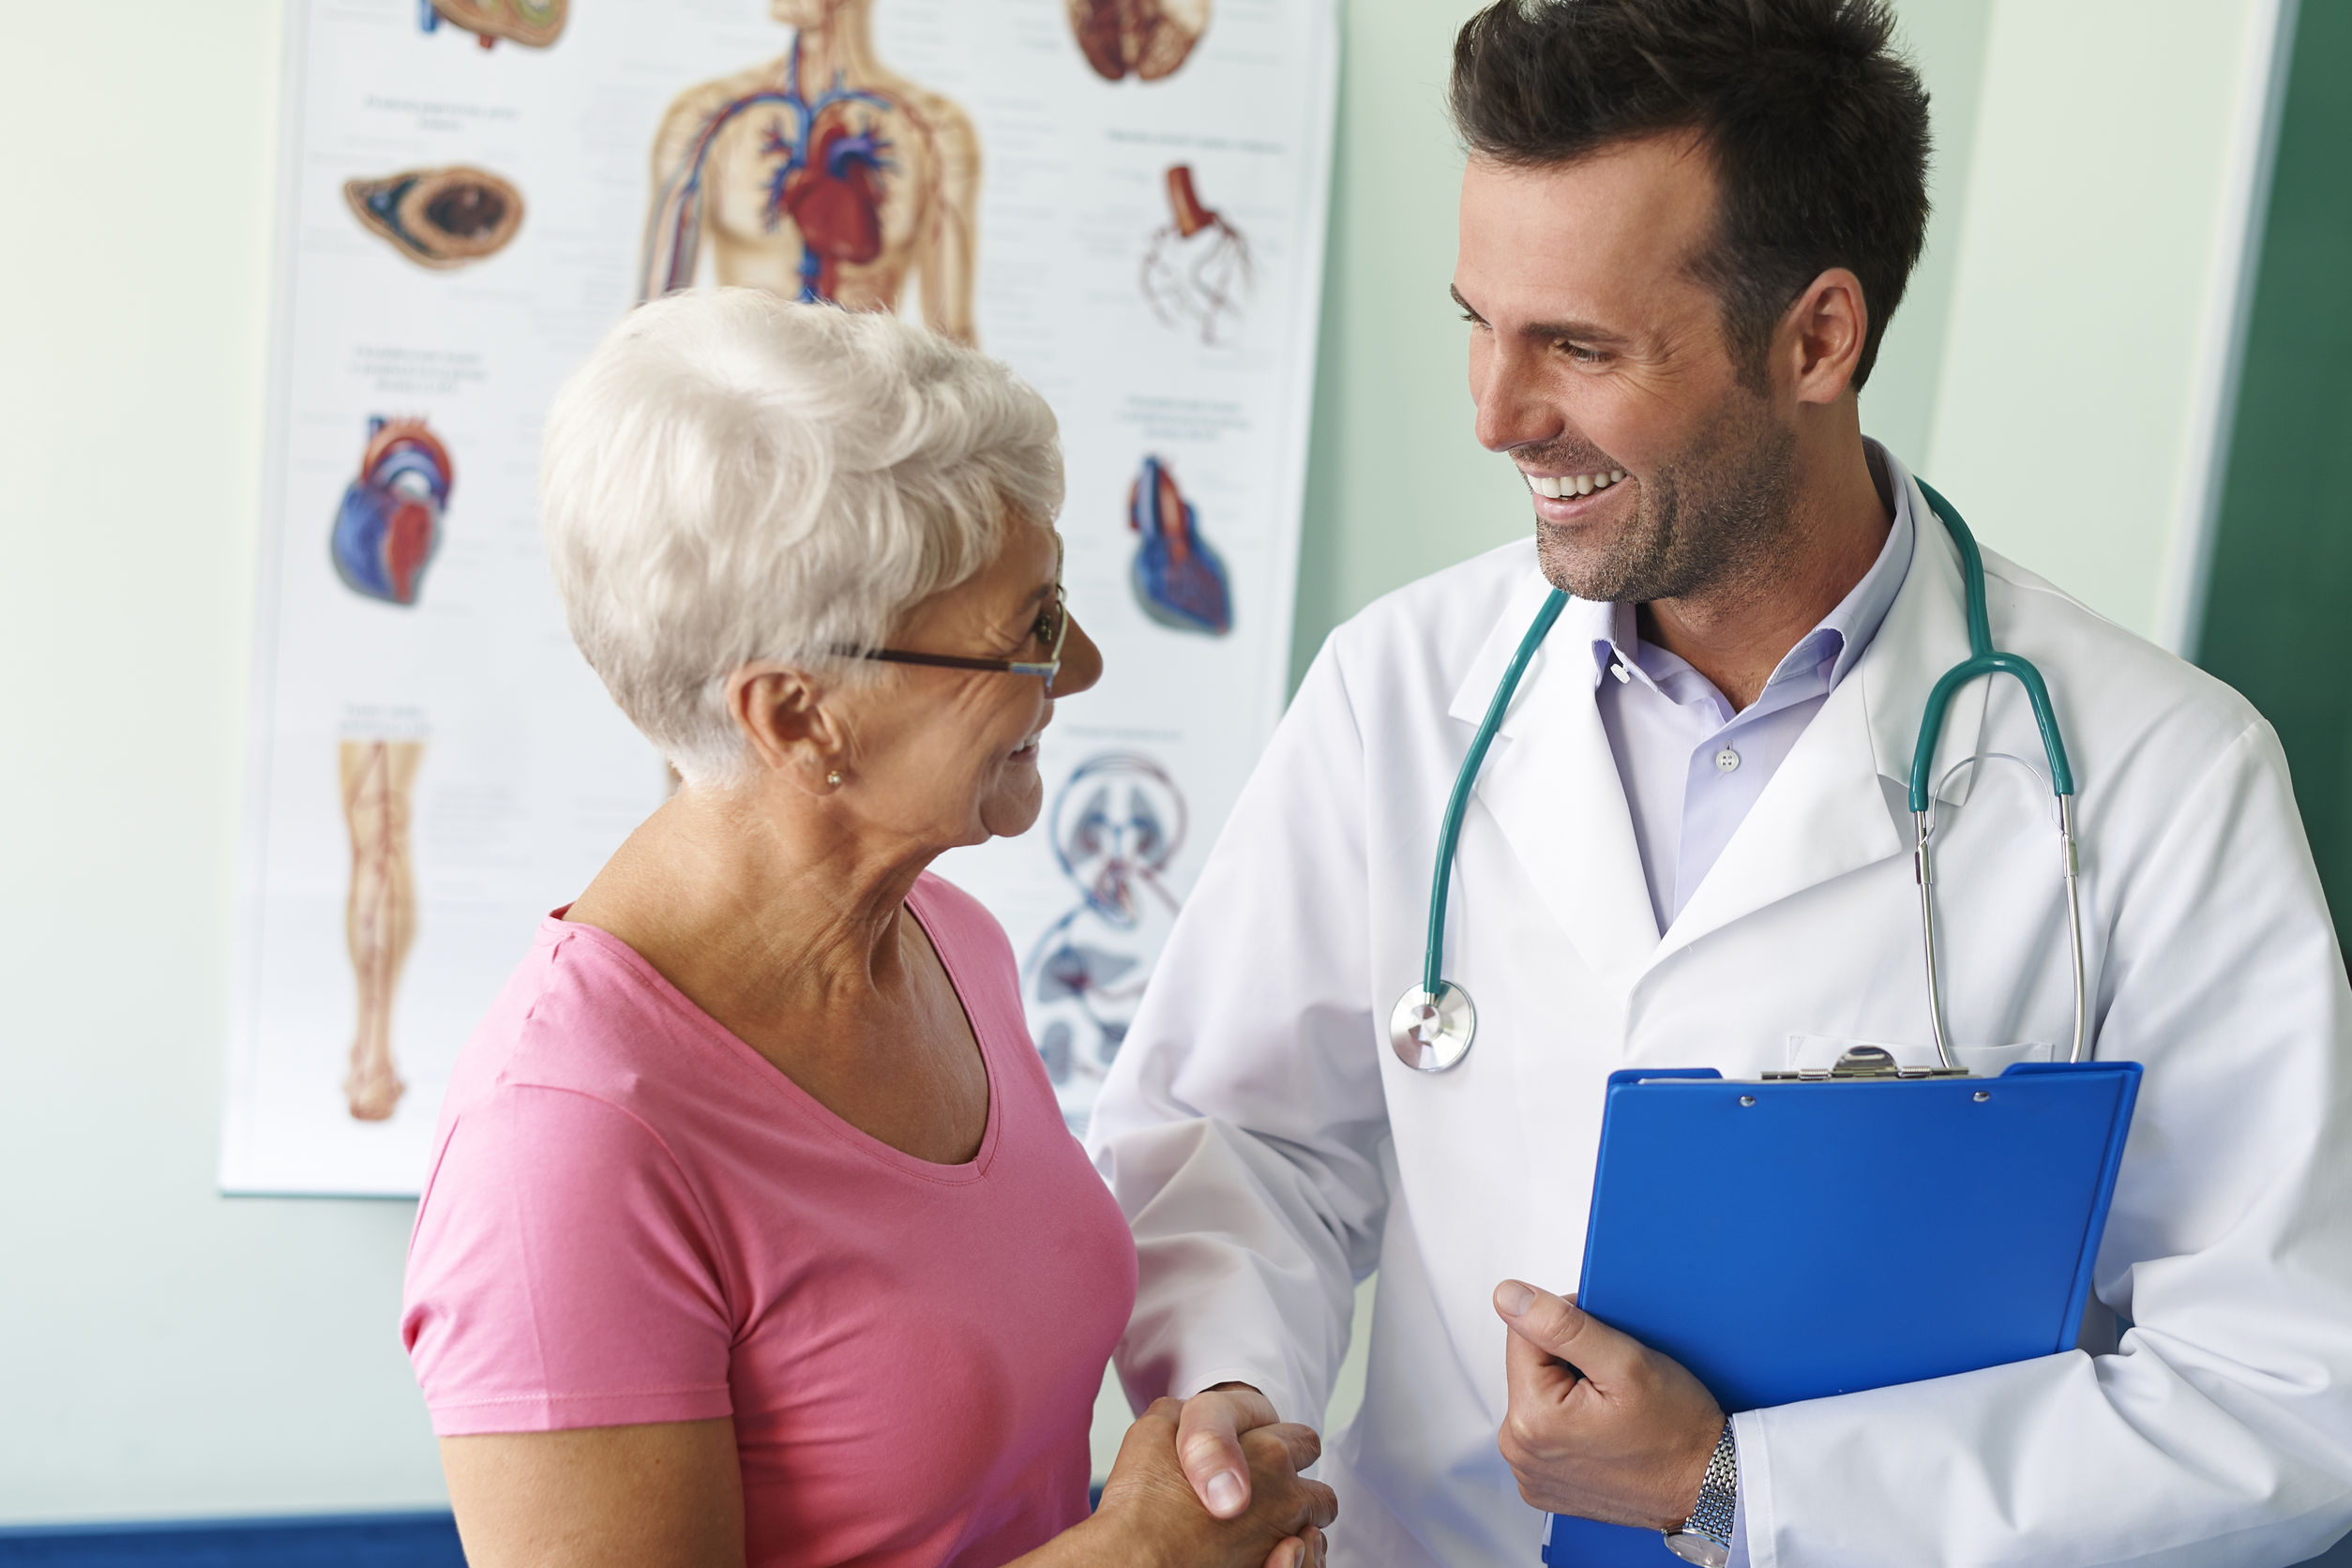 patient retention strategies are integral to senior health